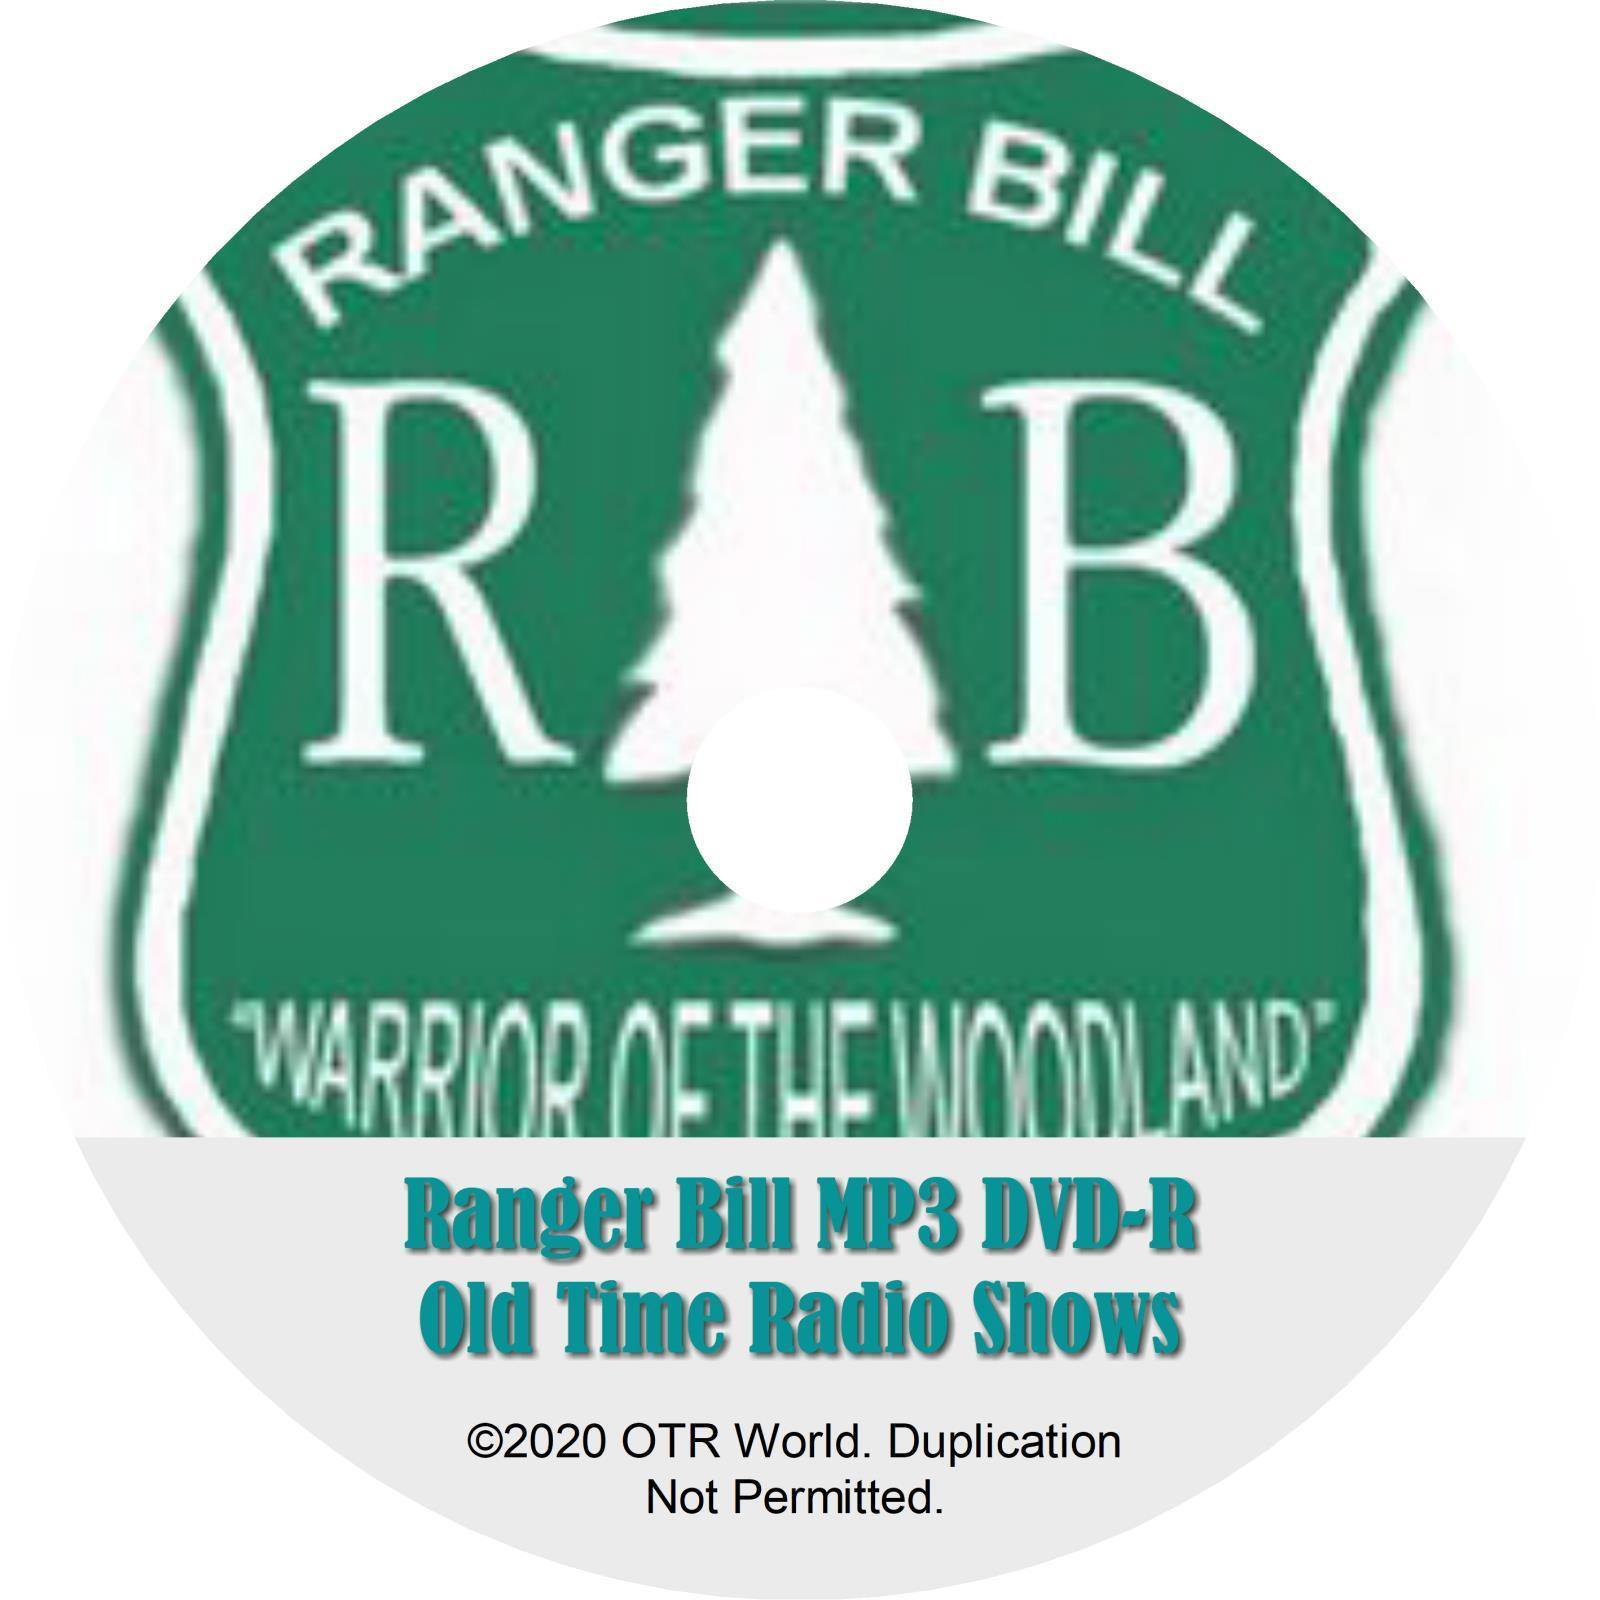 Ranger Bill OTR OTRS Old Time Radio Shows MP3 On DVD-R 221 Episodes - OTR World